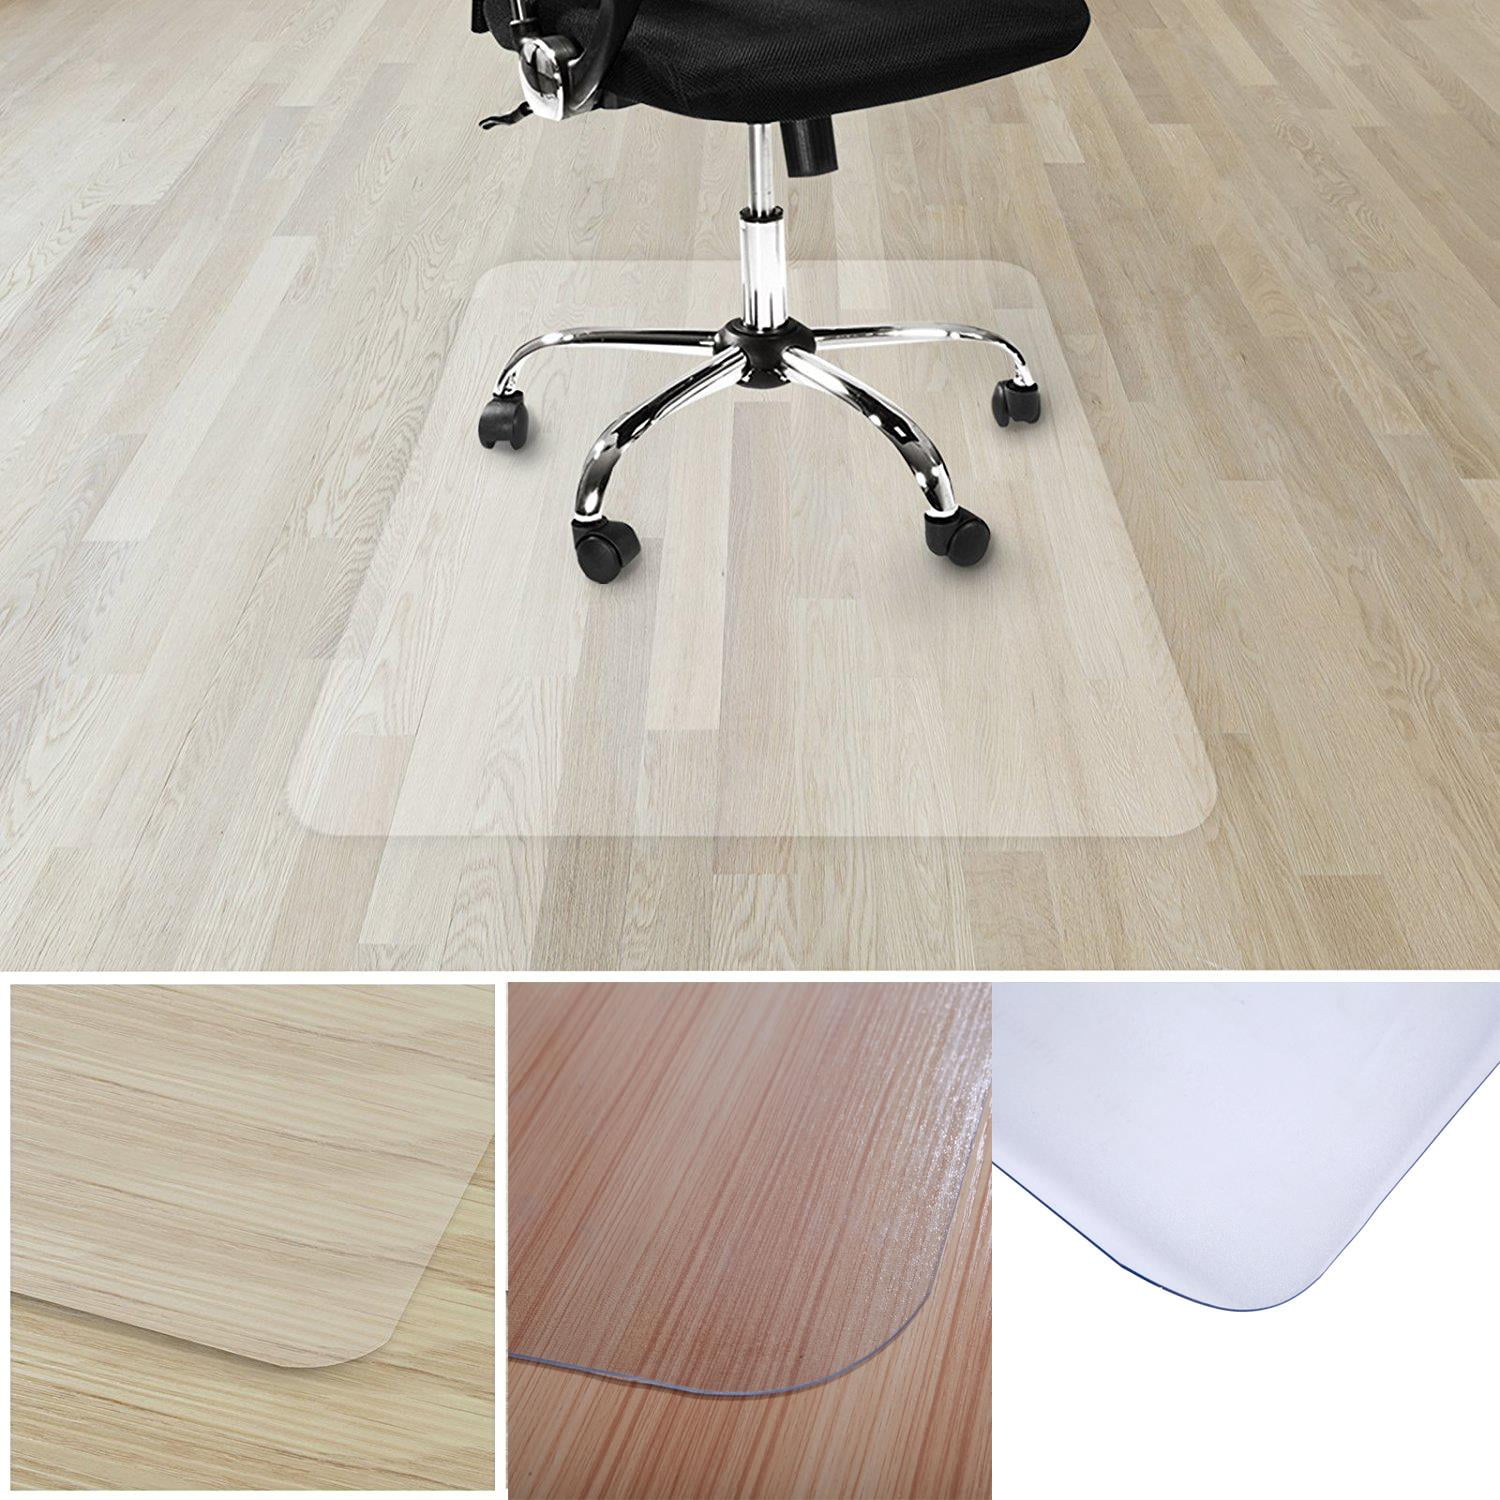 Durable PVC 48"x36" Chair Office Home Desk Mat for Tile Hard Wood Floors Chair 